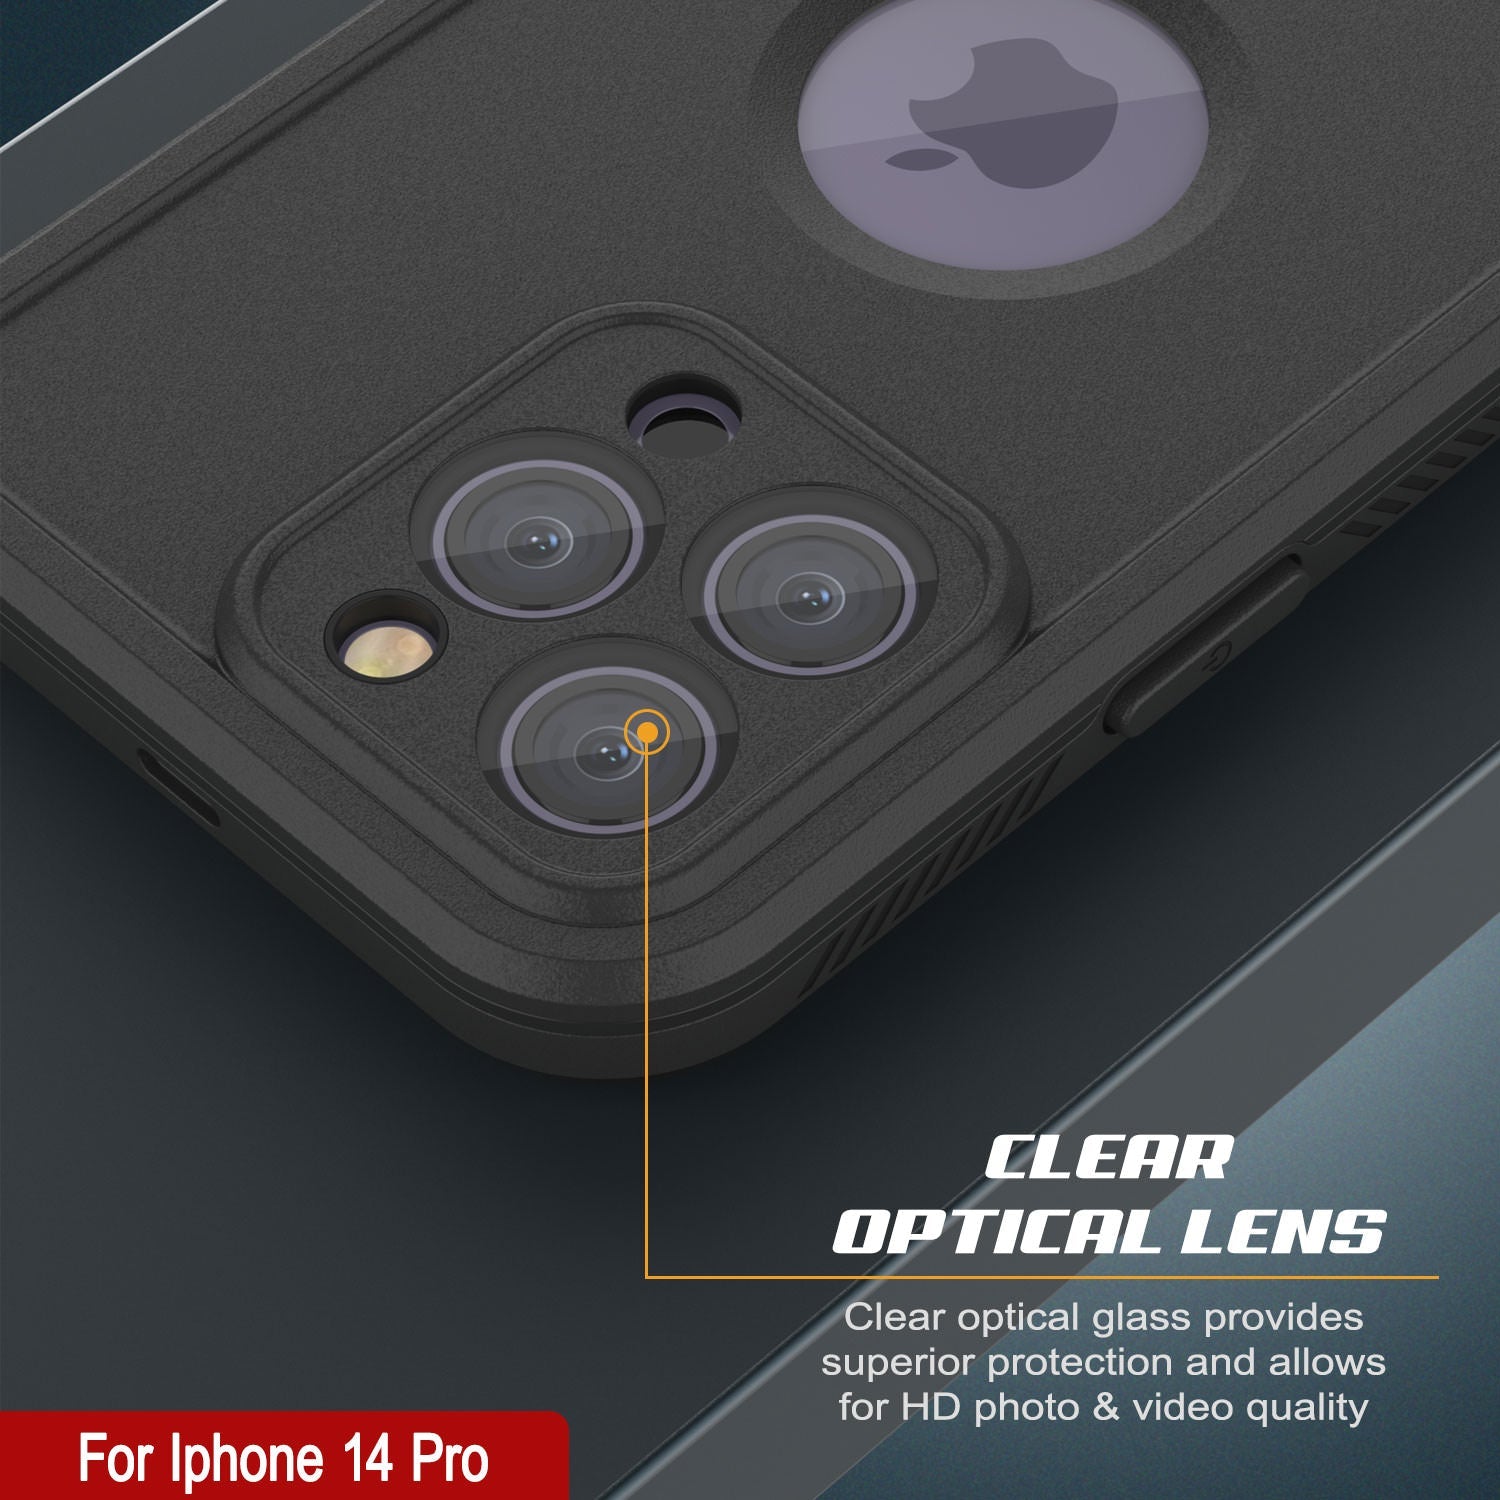 Punkcase iPhone 14 Pro Waterproof Case [Aqua Extreme Series] Armor Cover [Black]